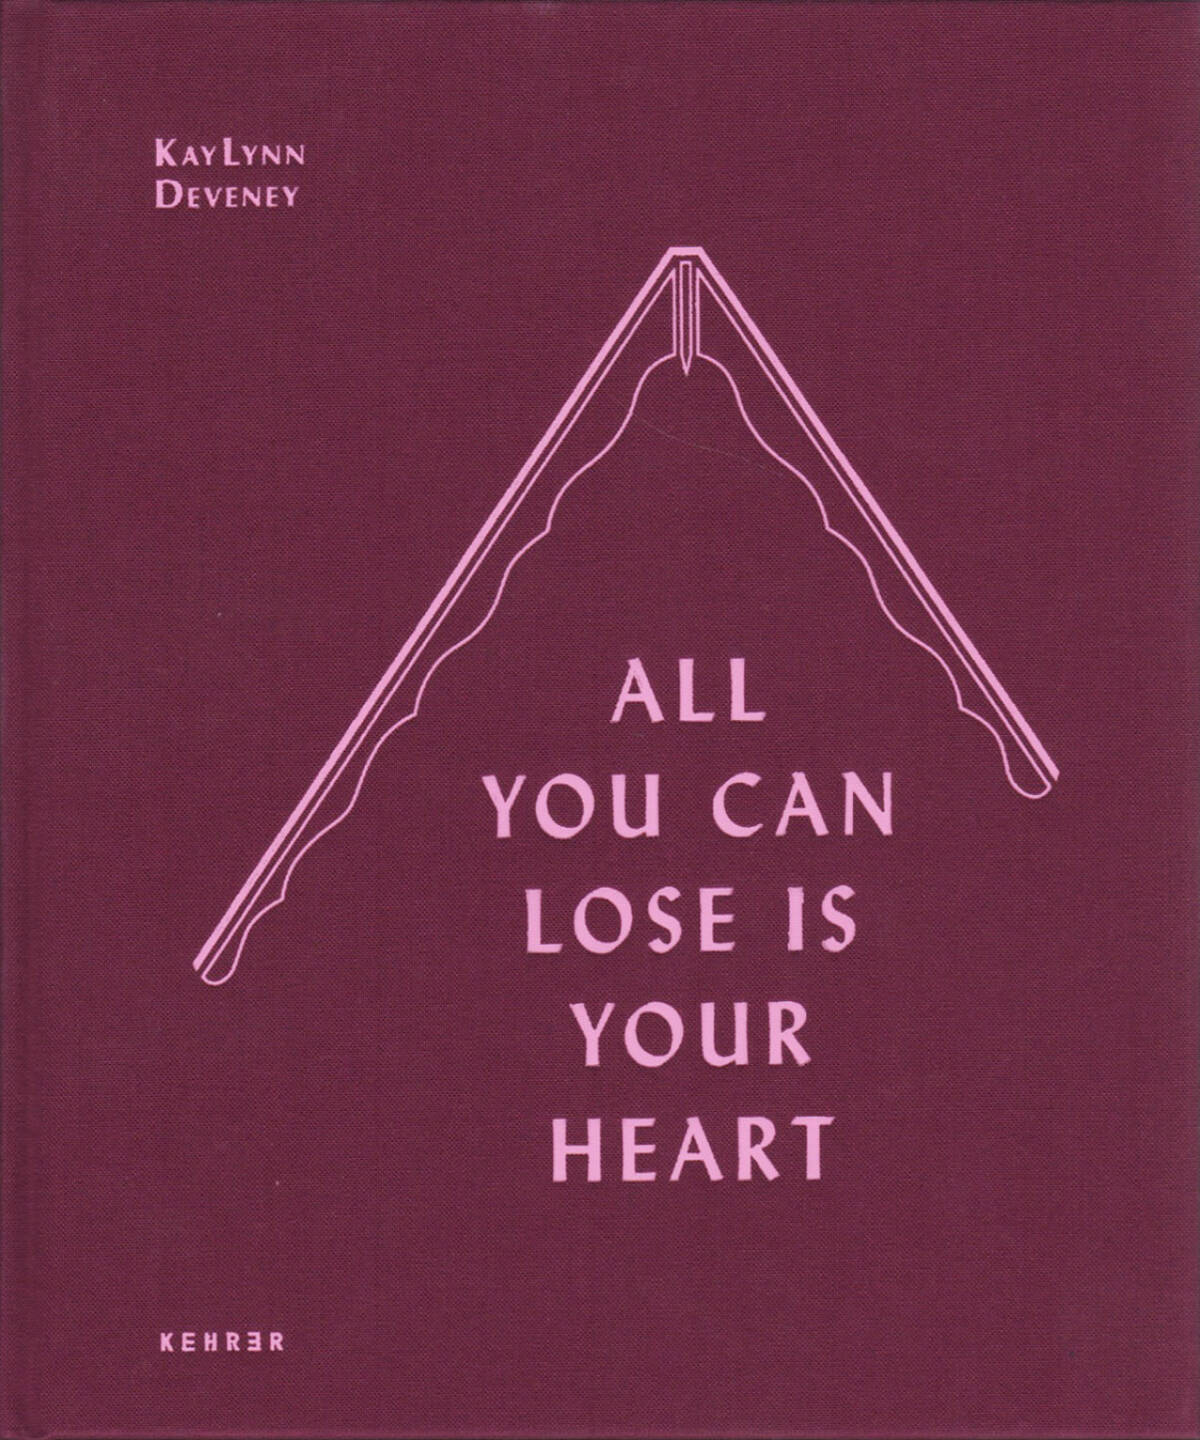 KayLynn Deveney - All You Can Lose is Your Heart, Kehrer 2015, Cover - http://josefchladek.com/book/kaylynn_deveney_-_all_you_can_lose_is_your_heart